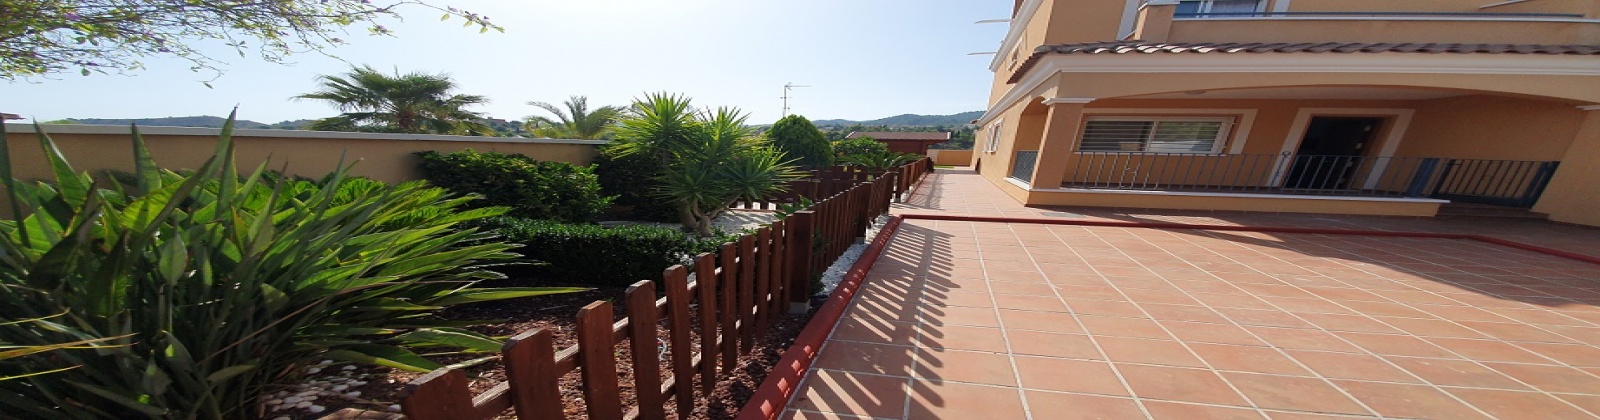 Jardin lateral vivienda en Torreguil